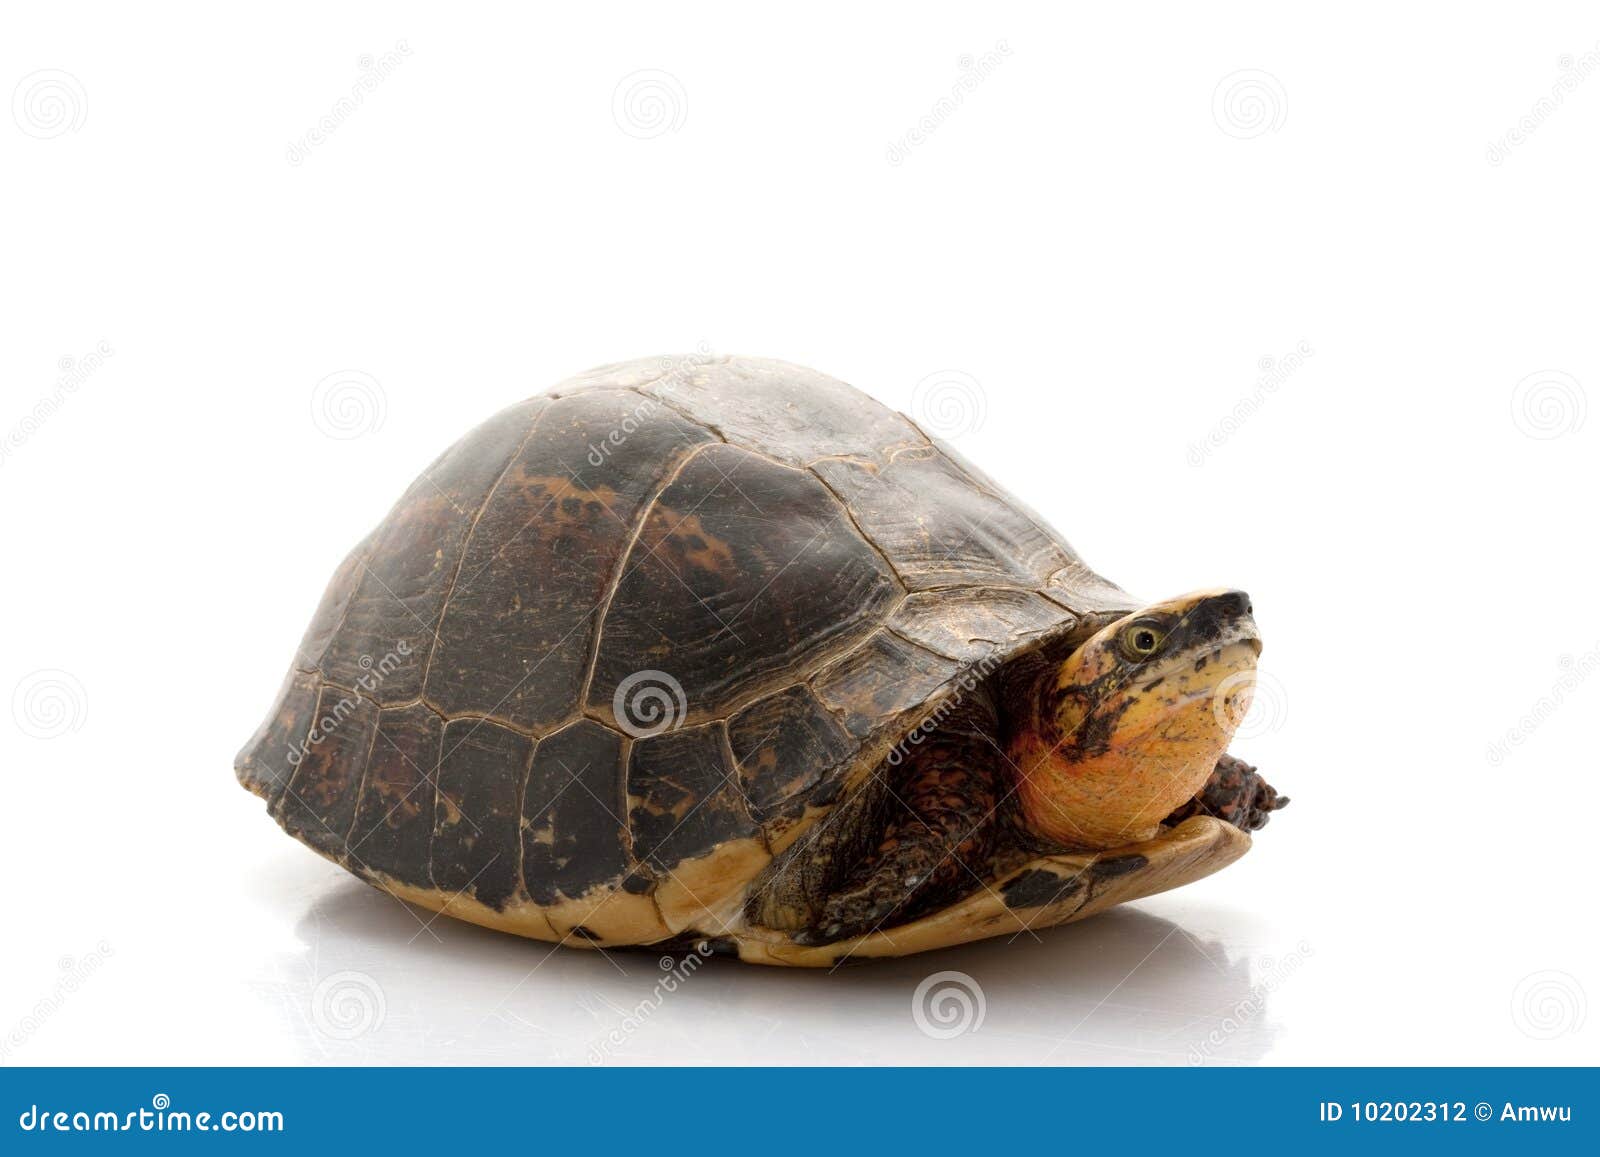 Flowerback Box Turtle stock photo. Image of white, animal - 10202312